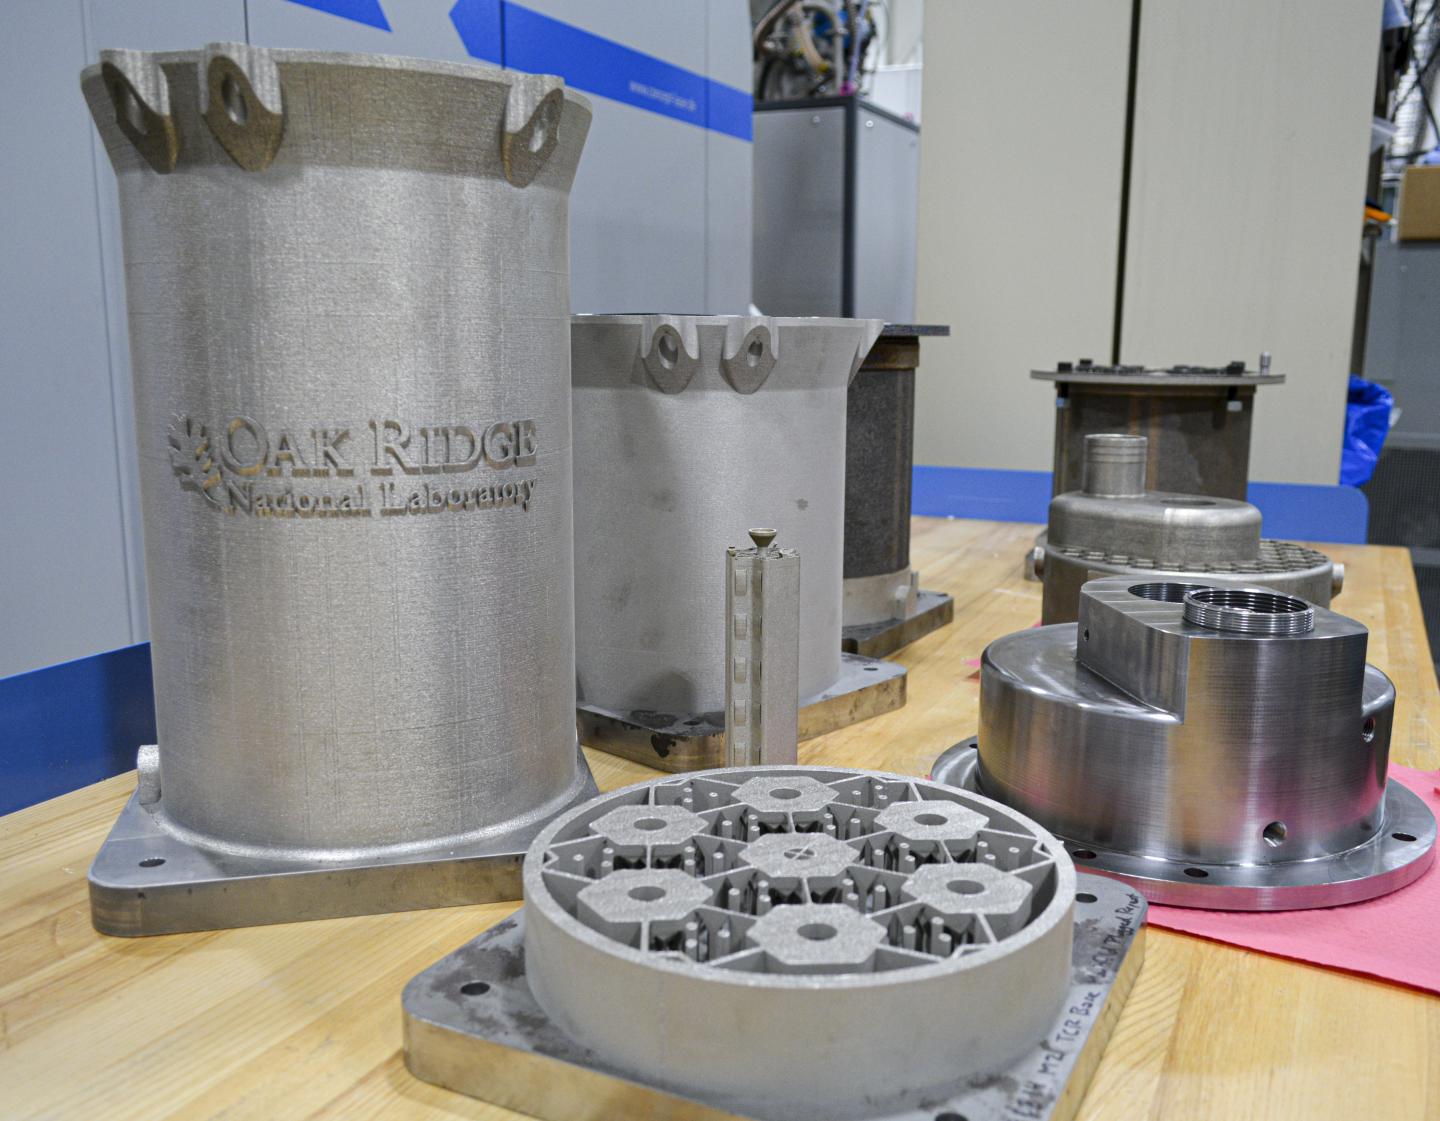 3D printed components for one of Oak Ridge's prototype reactors. Photo via Britanny Cramer/ORNL/US Dept. of Energy.